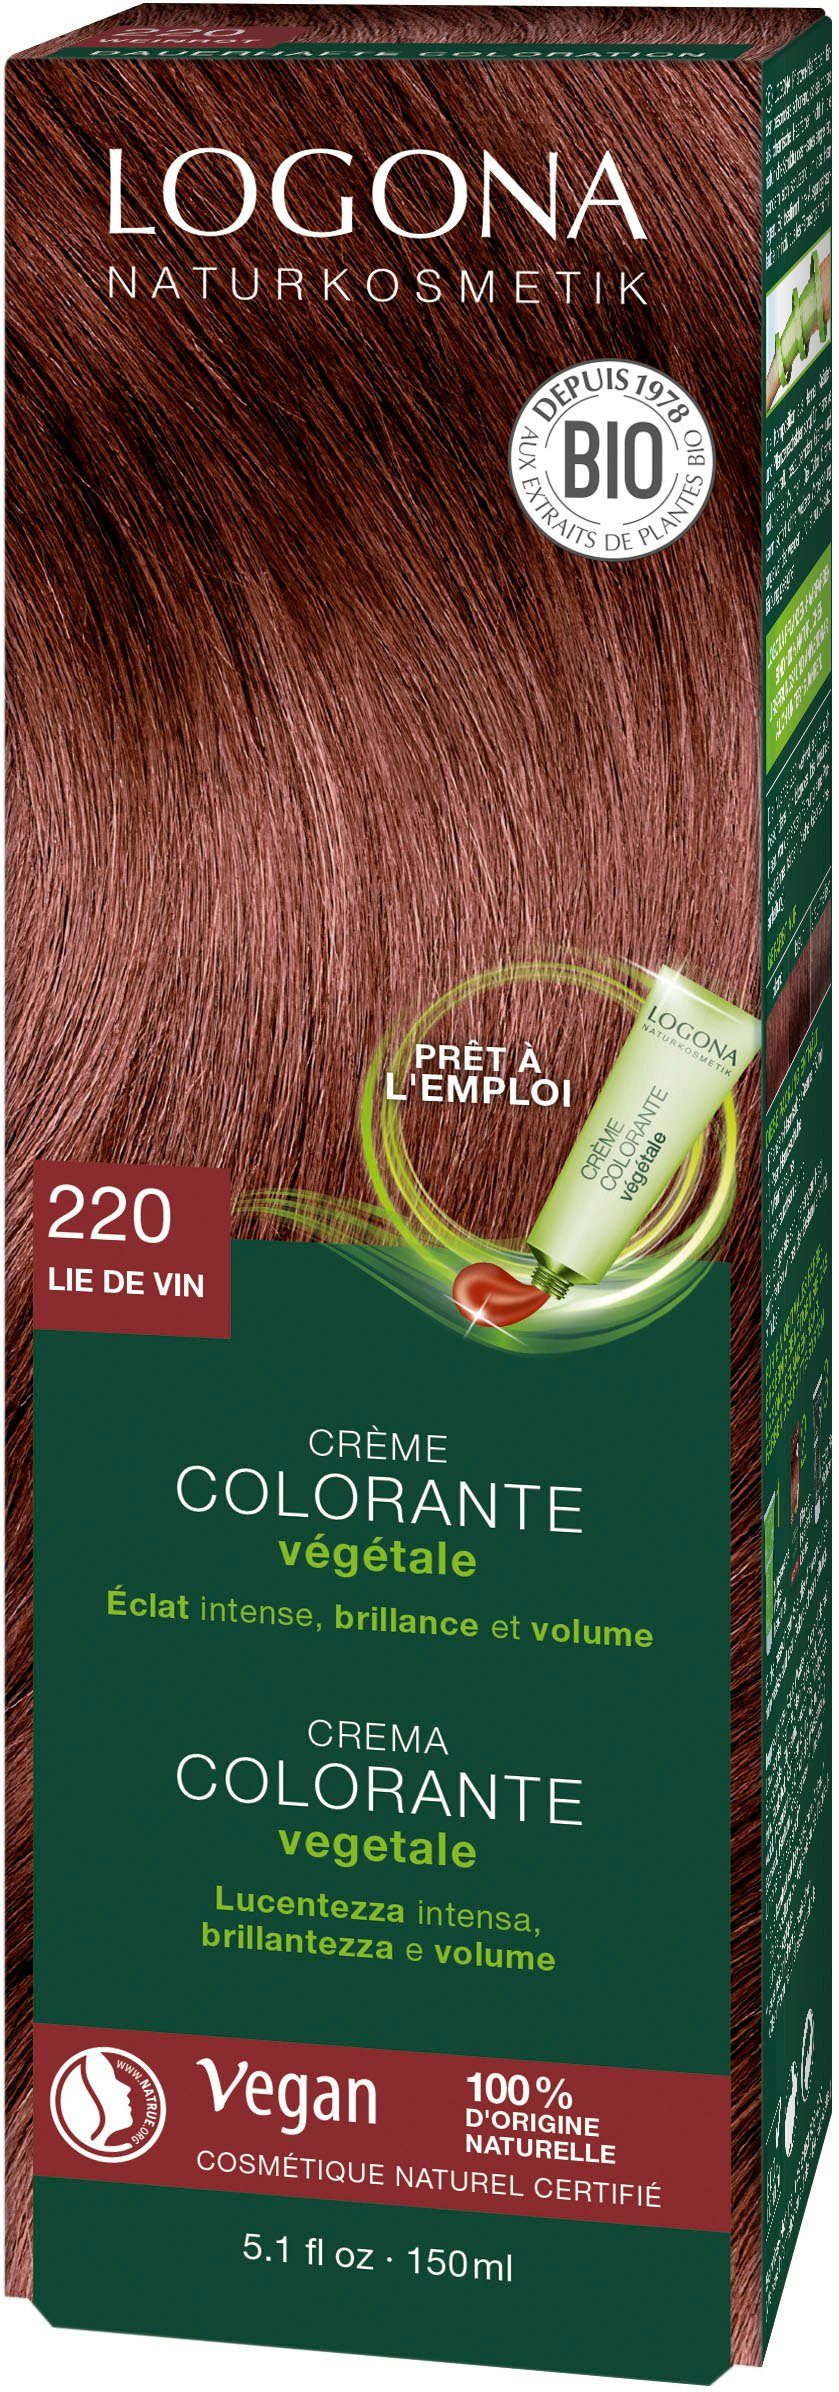 LOGONA Haarfarbe 220 Pflanzen-Haarfarbe weinrot Creme Logona